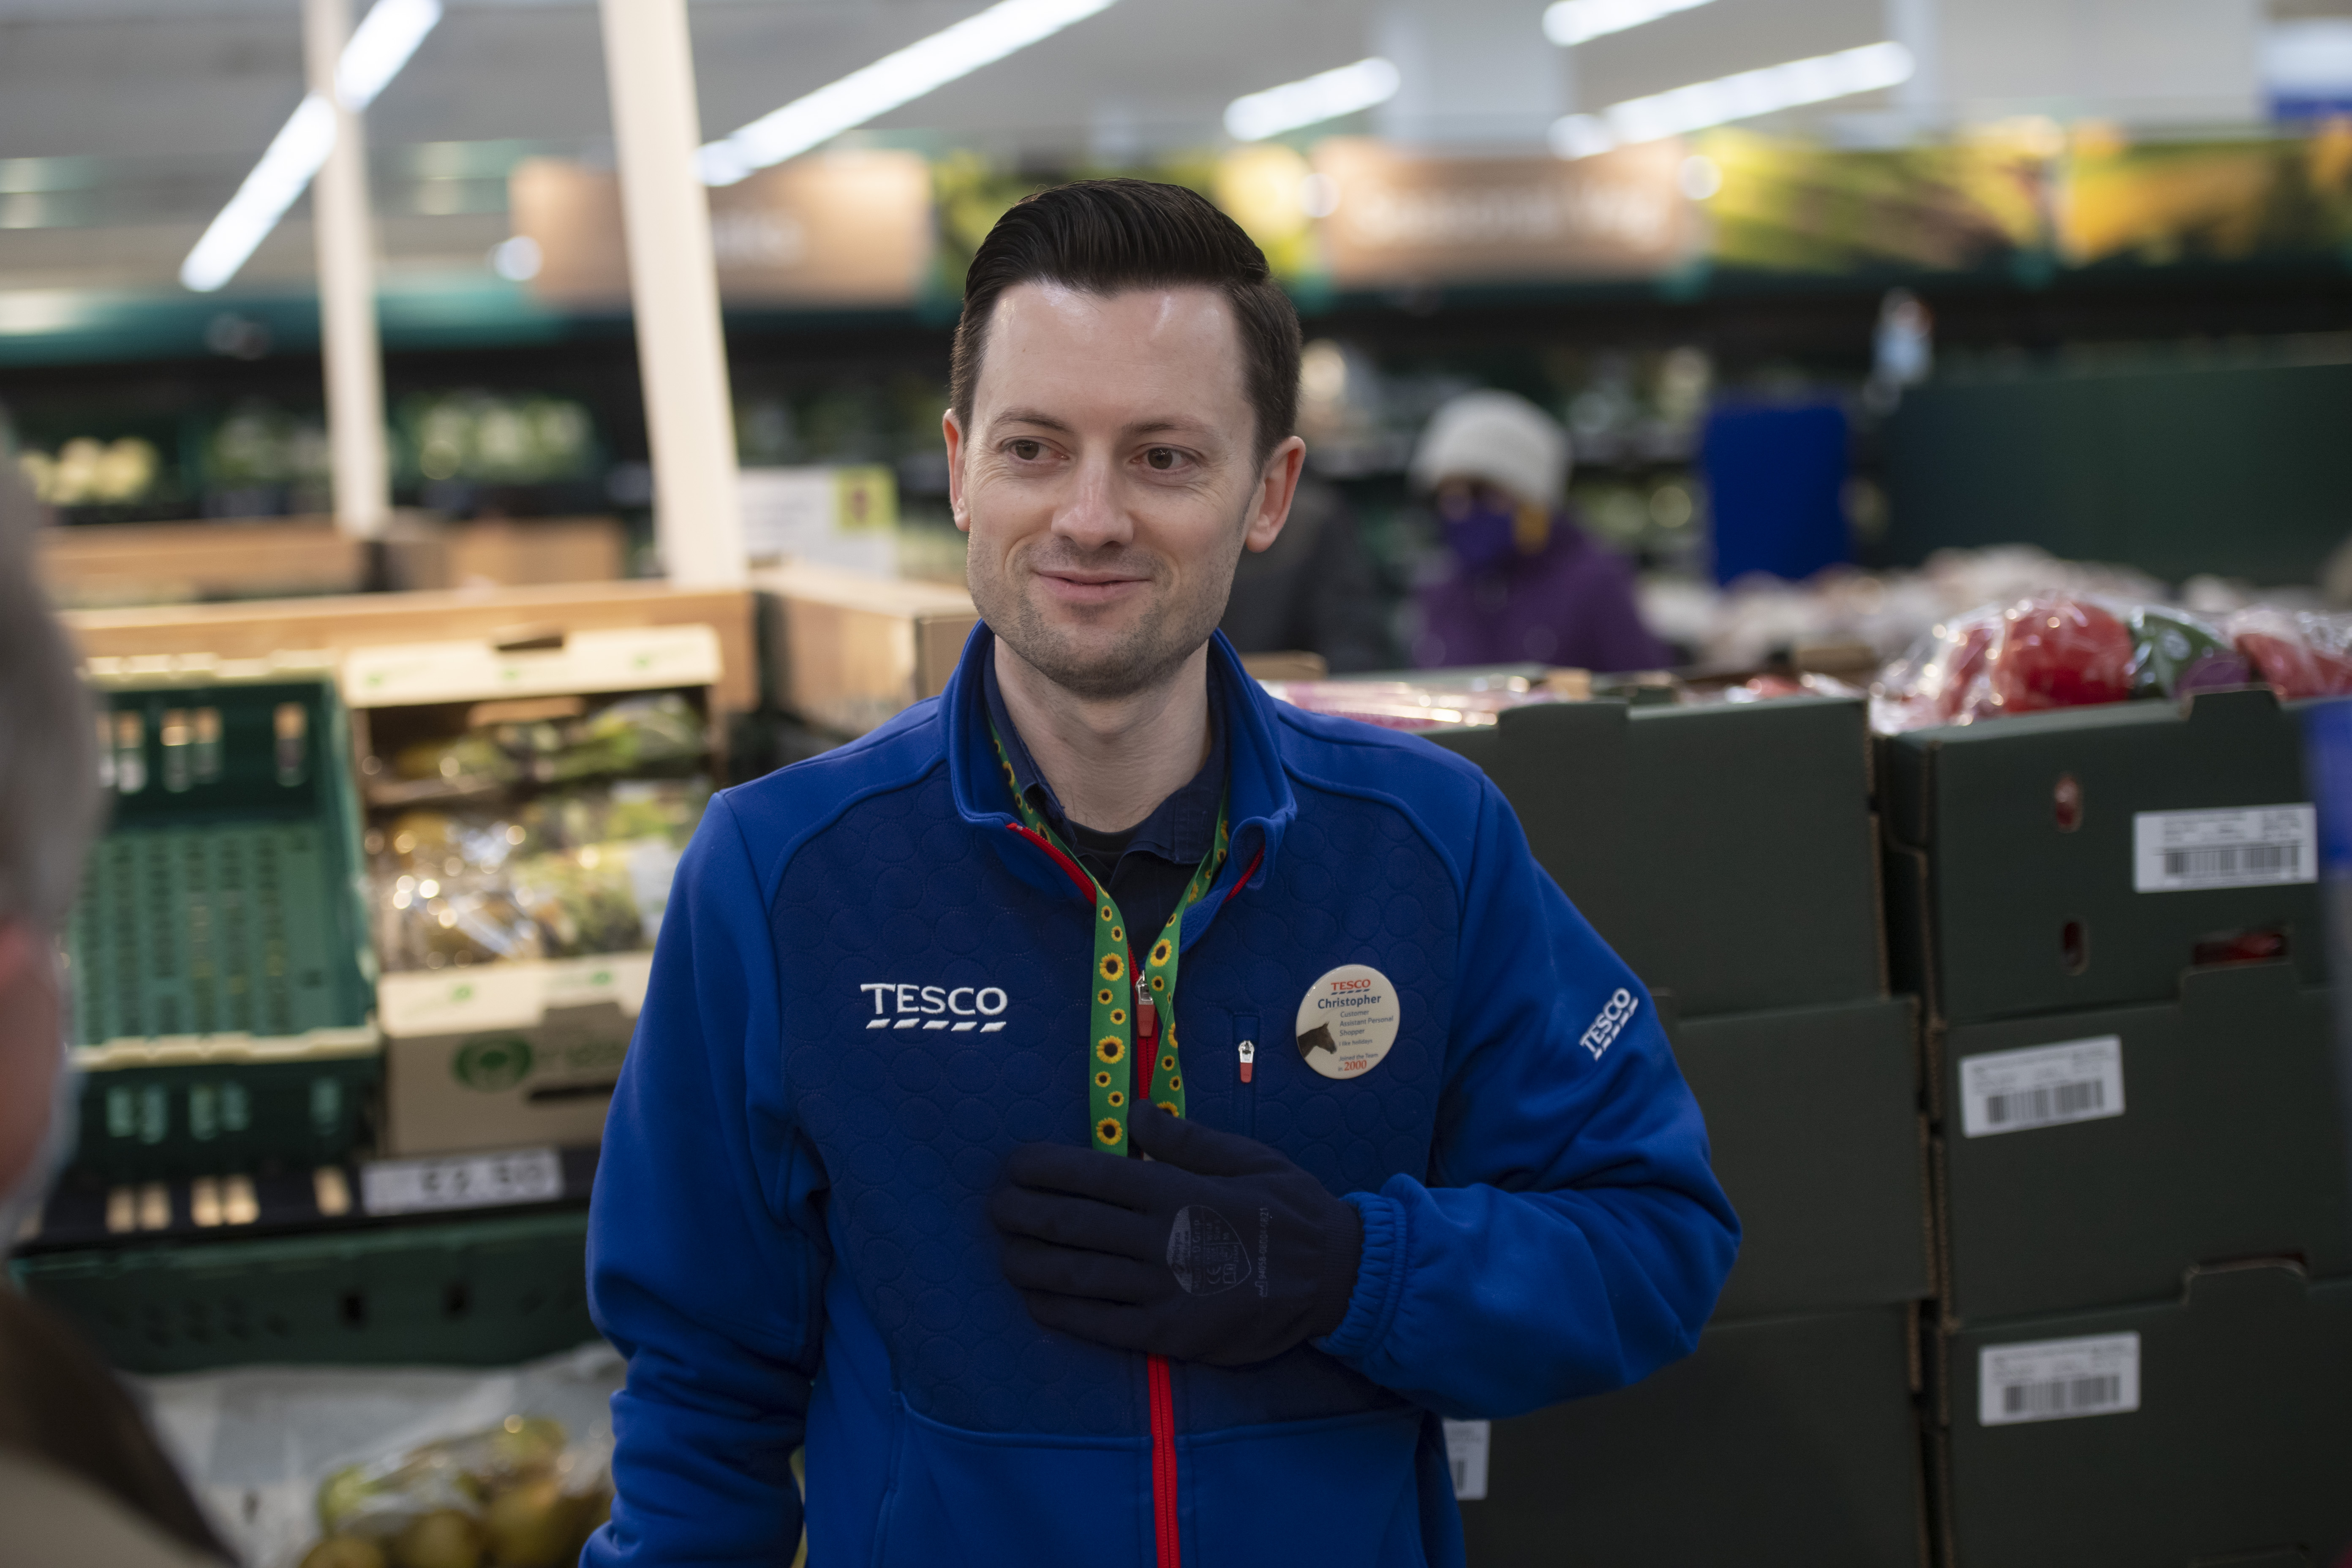 Tesco colleague in the produce aisle